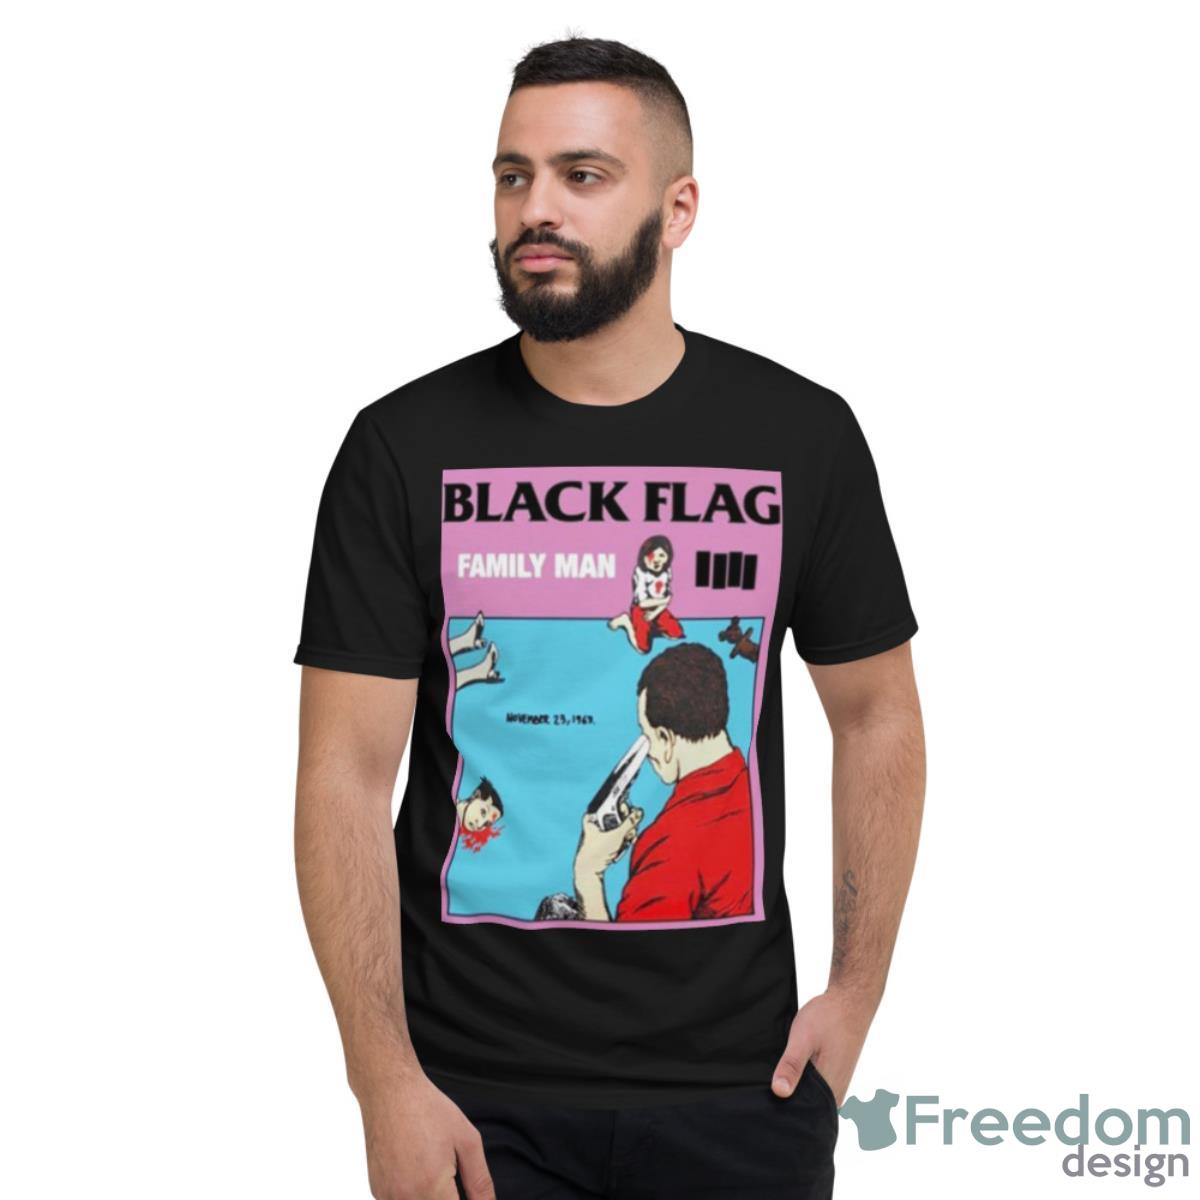 Black Flag Family Man Shirt